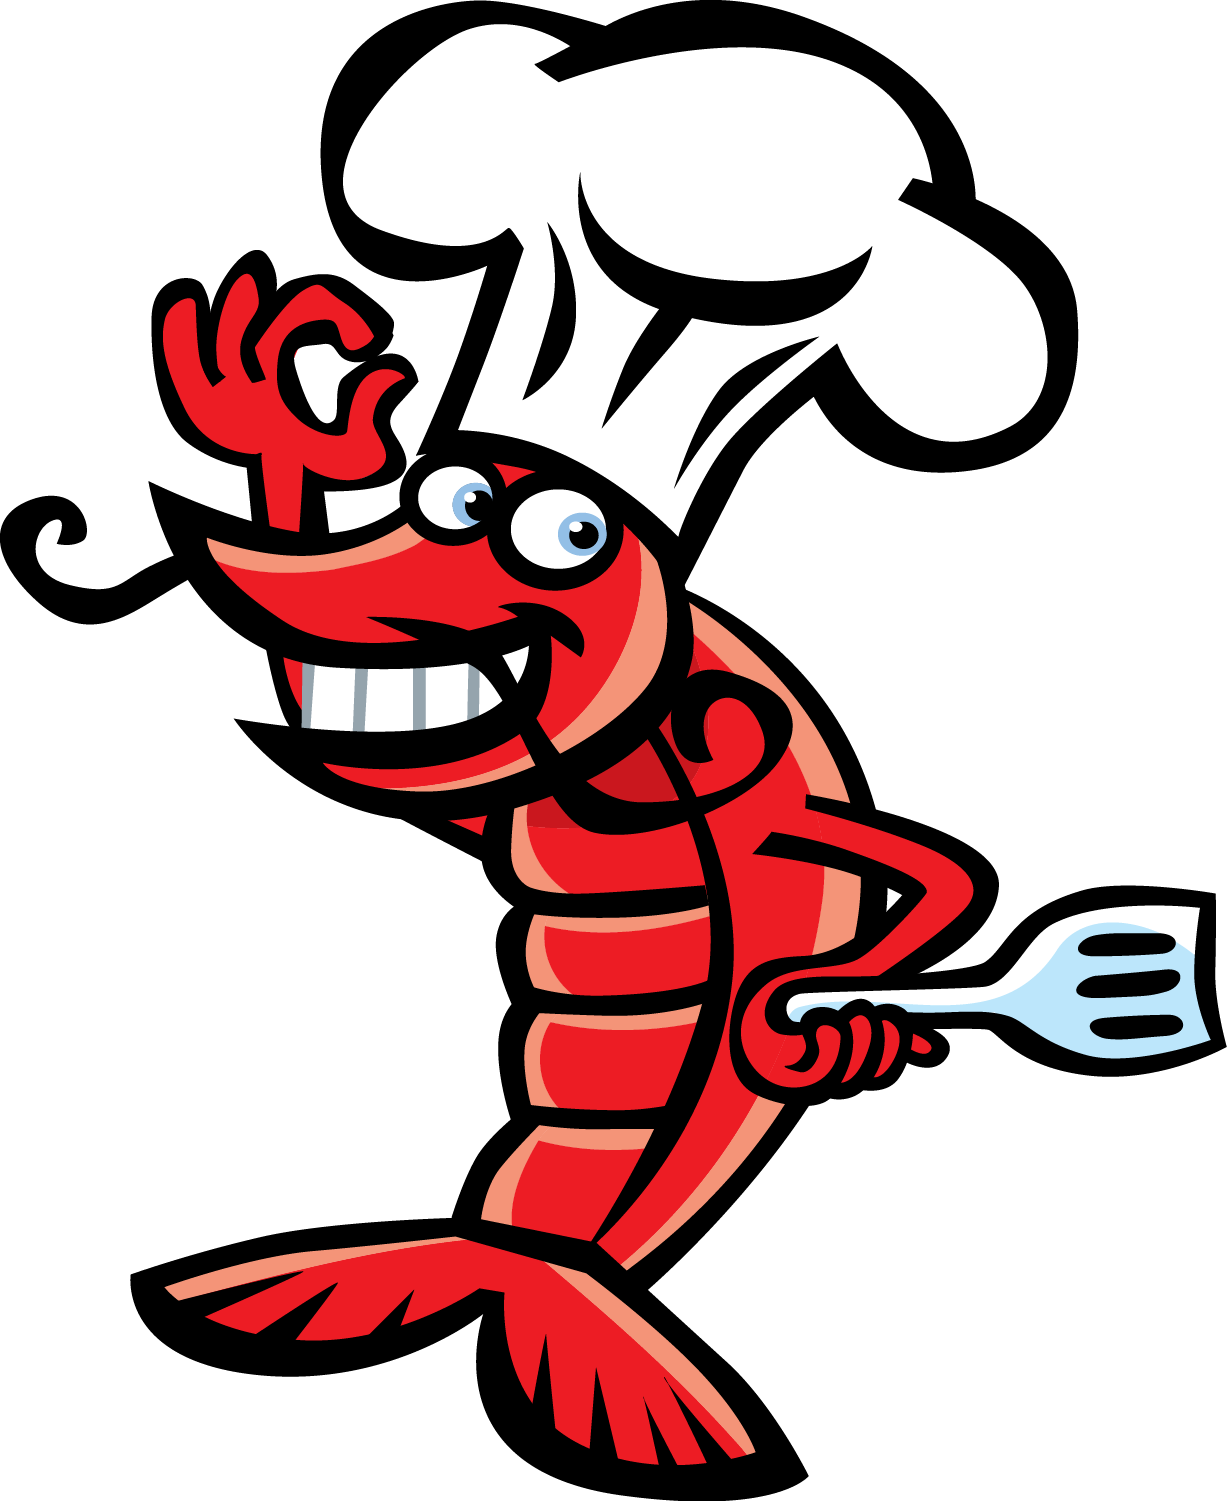 Shrimp Of Shrimp Download Wmf 2 Image Clipart